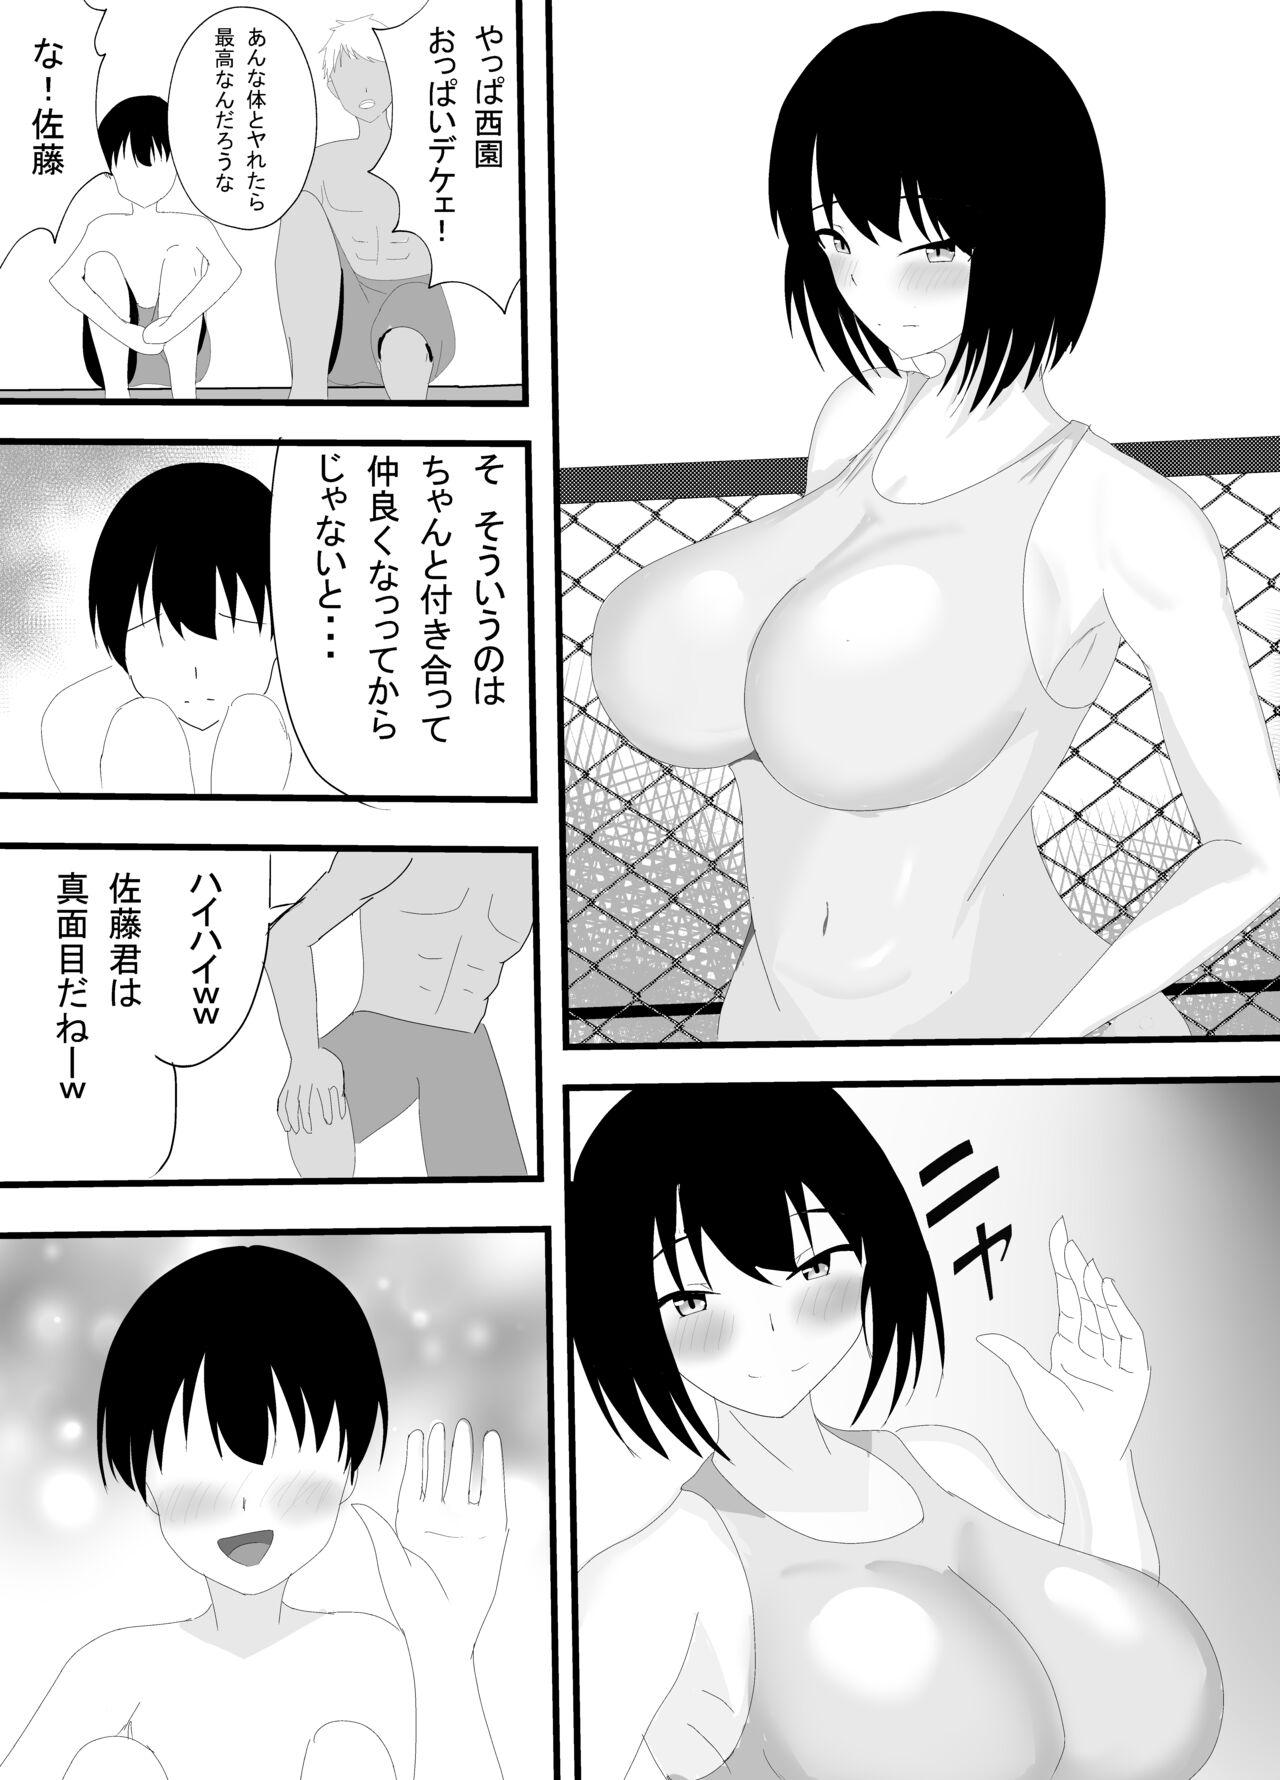 Interview 僕の知らない雌の顔 Public Nudity - Page 6